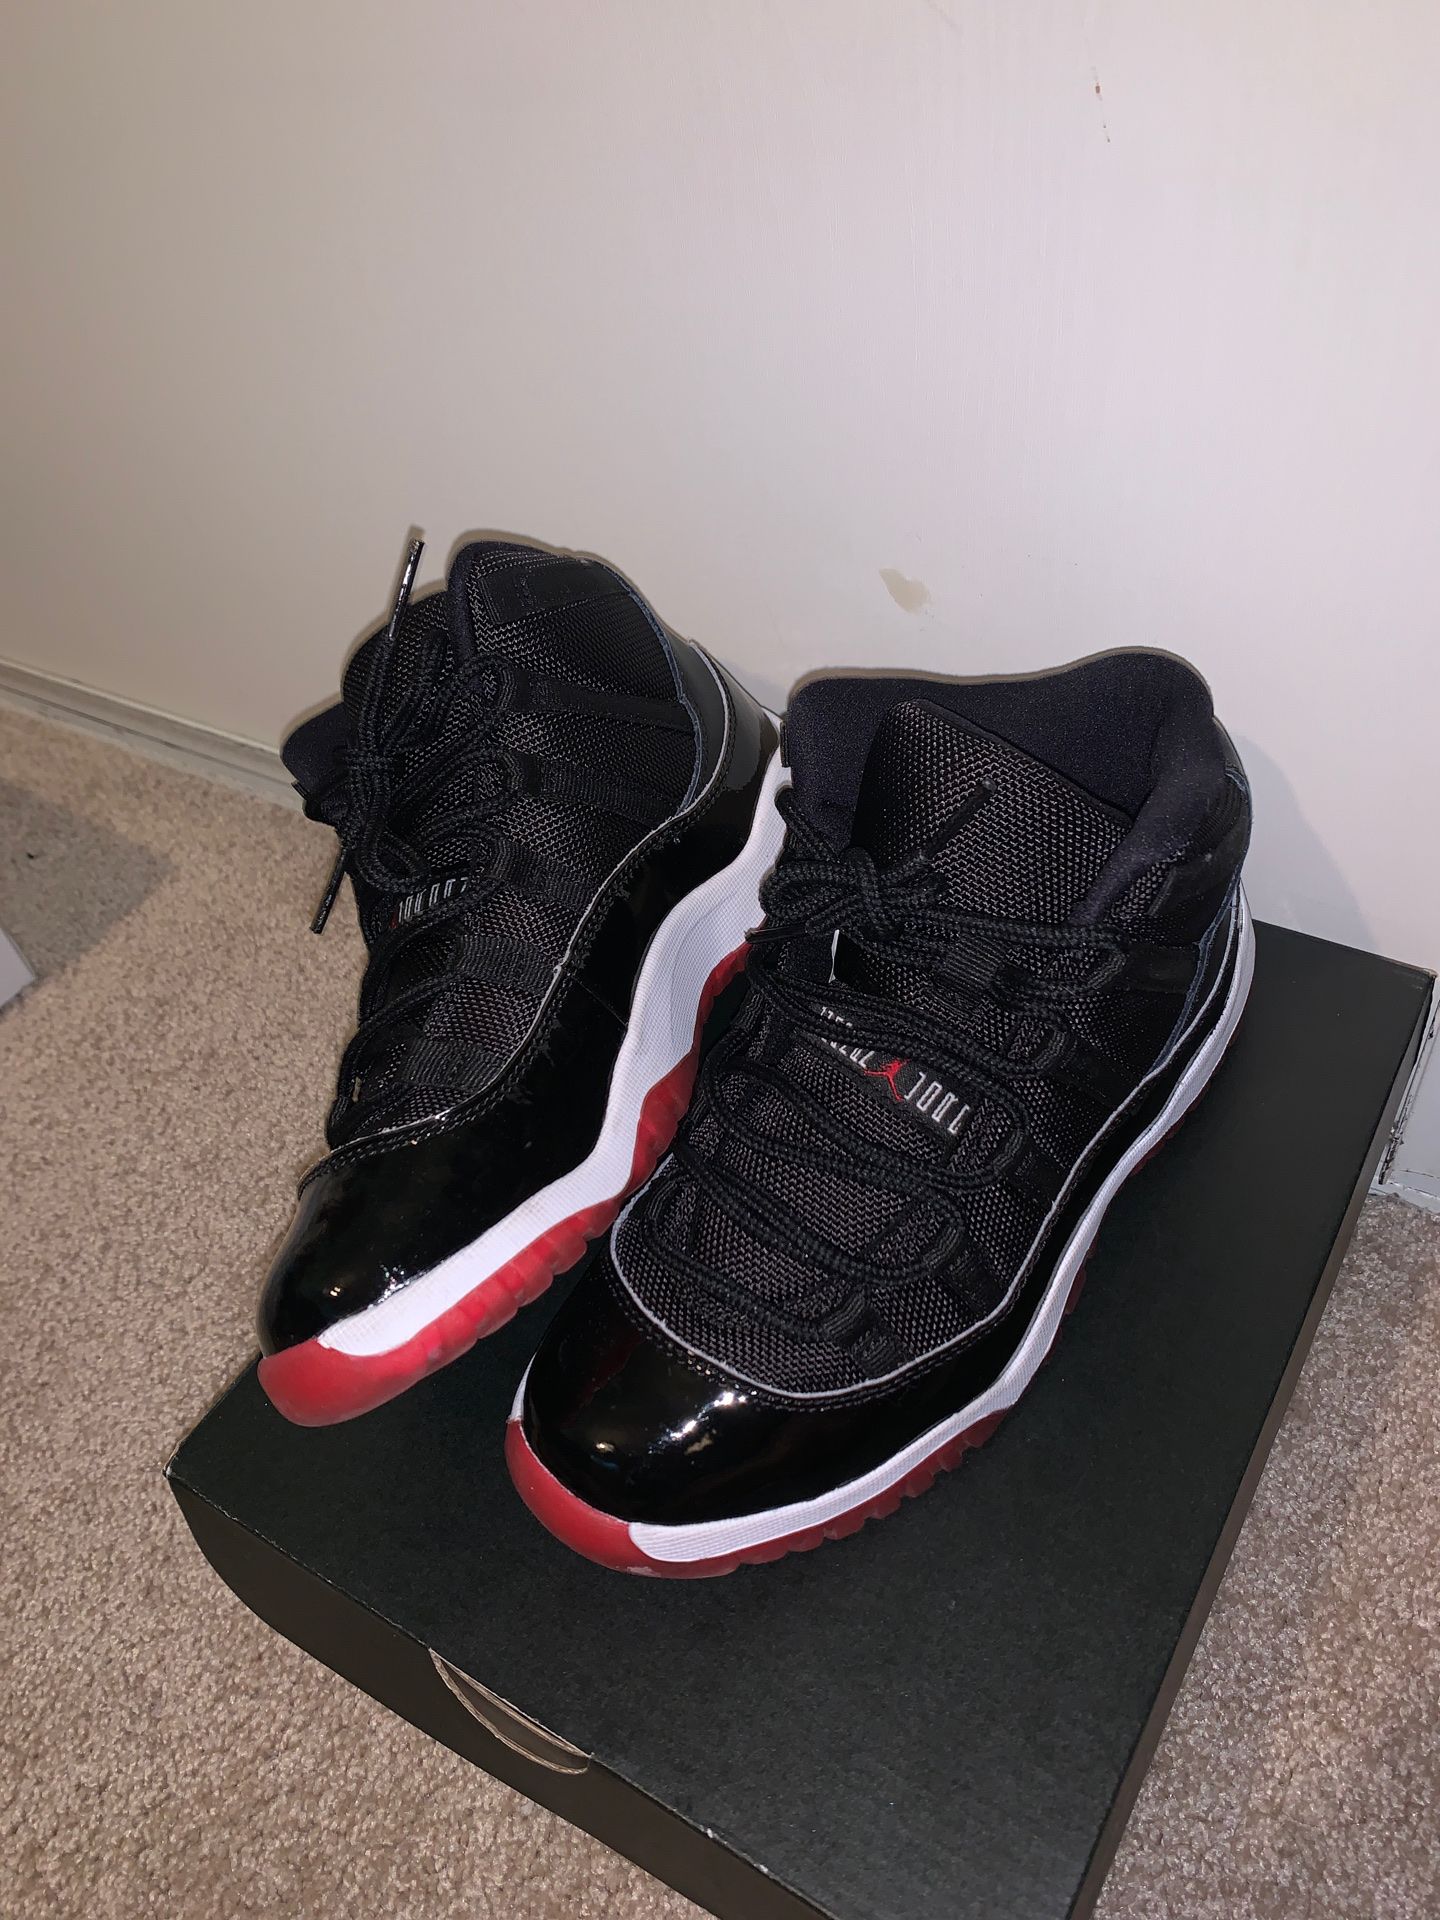 Jordan 11 Retro (PS) Size 3